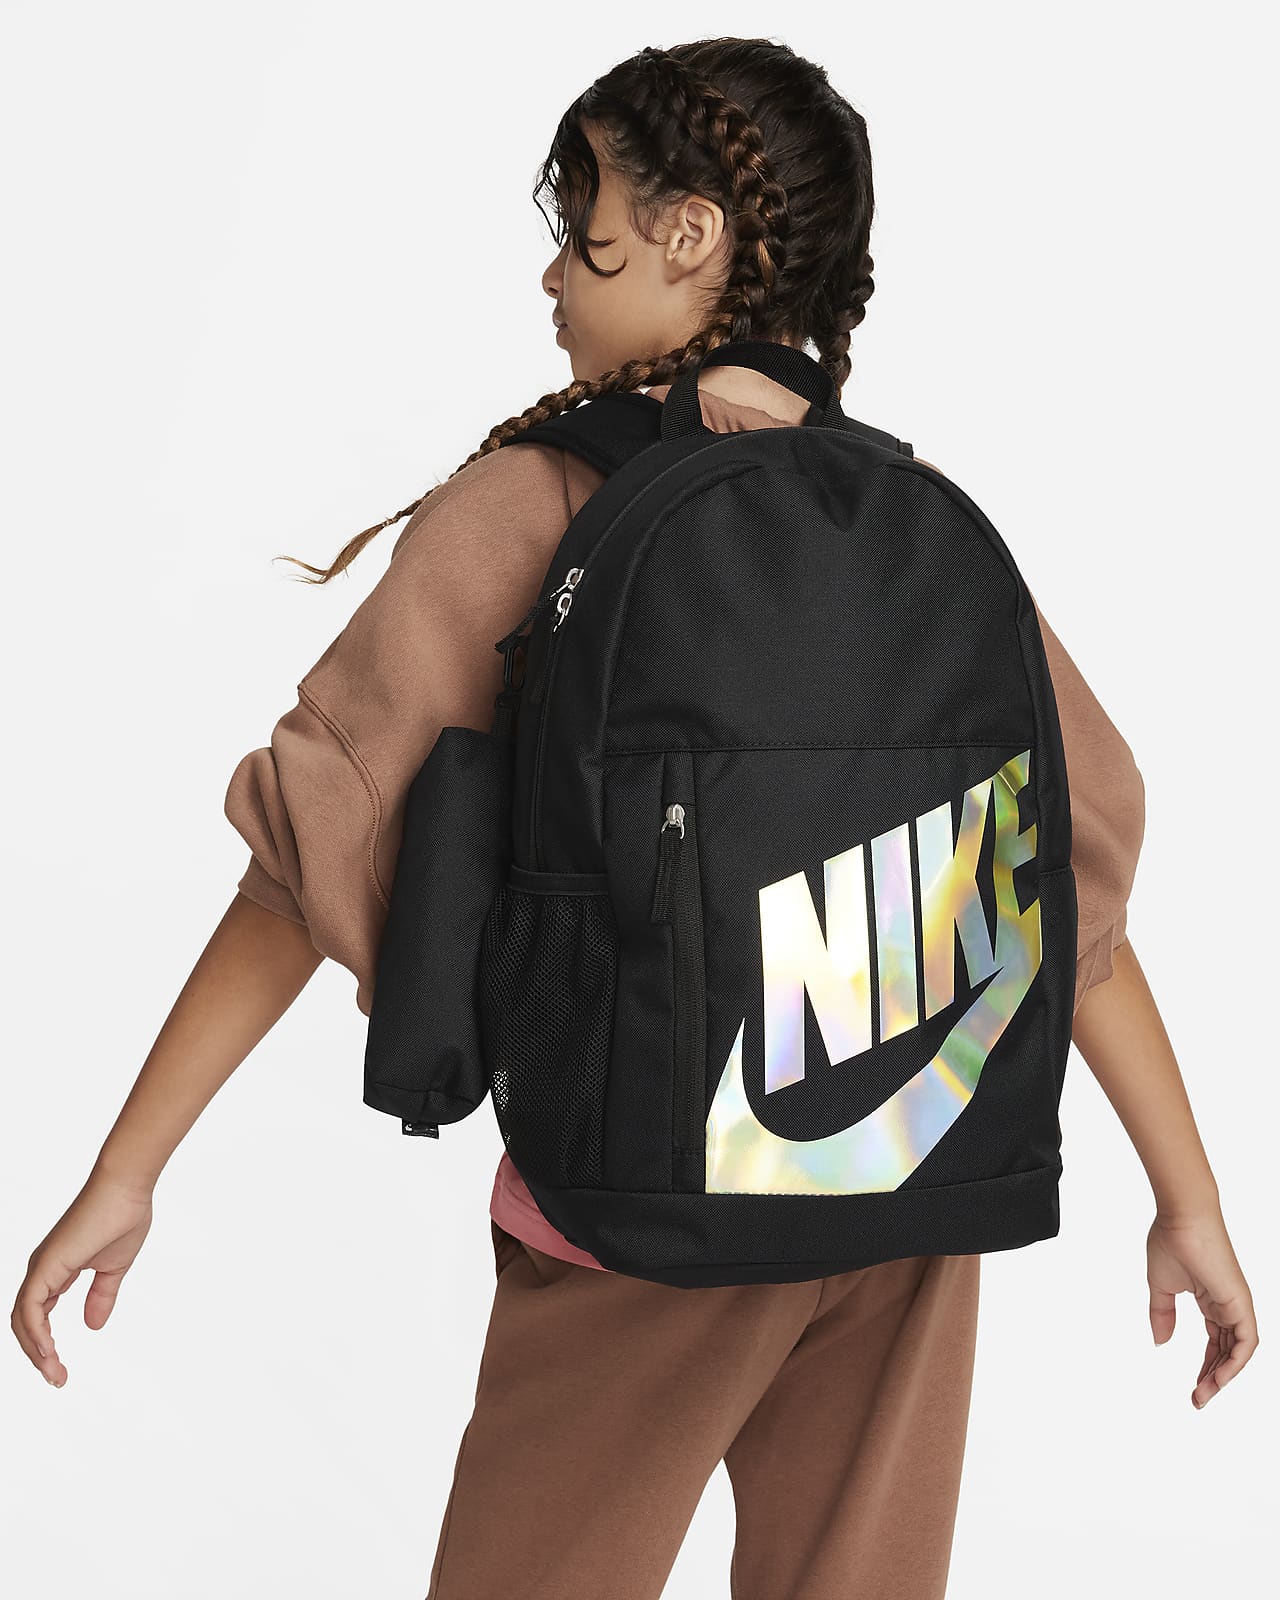 Nike Elemental Backpack Black / Unisex Kids School Sports Travel Bag Sack